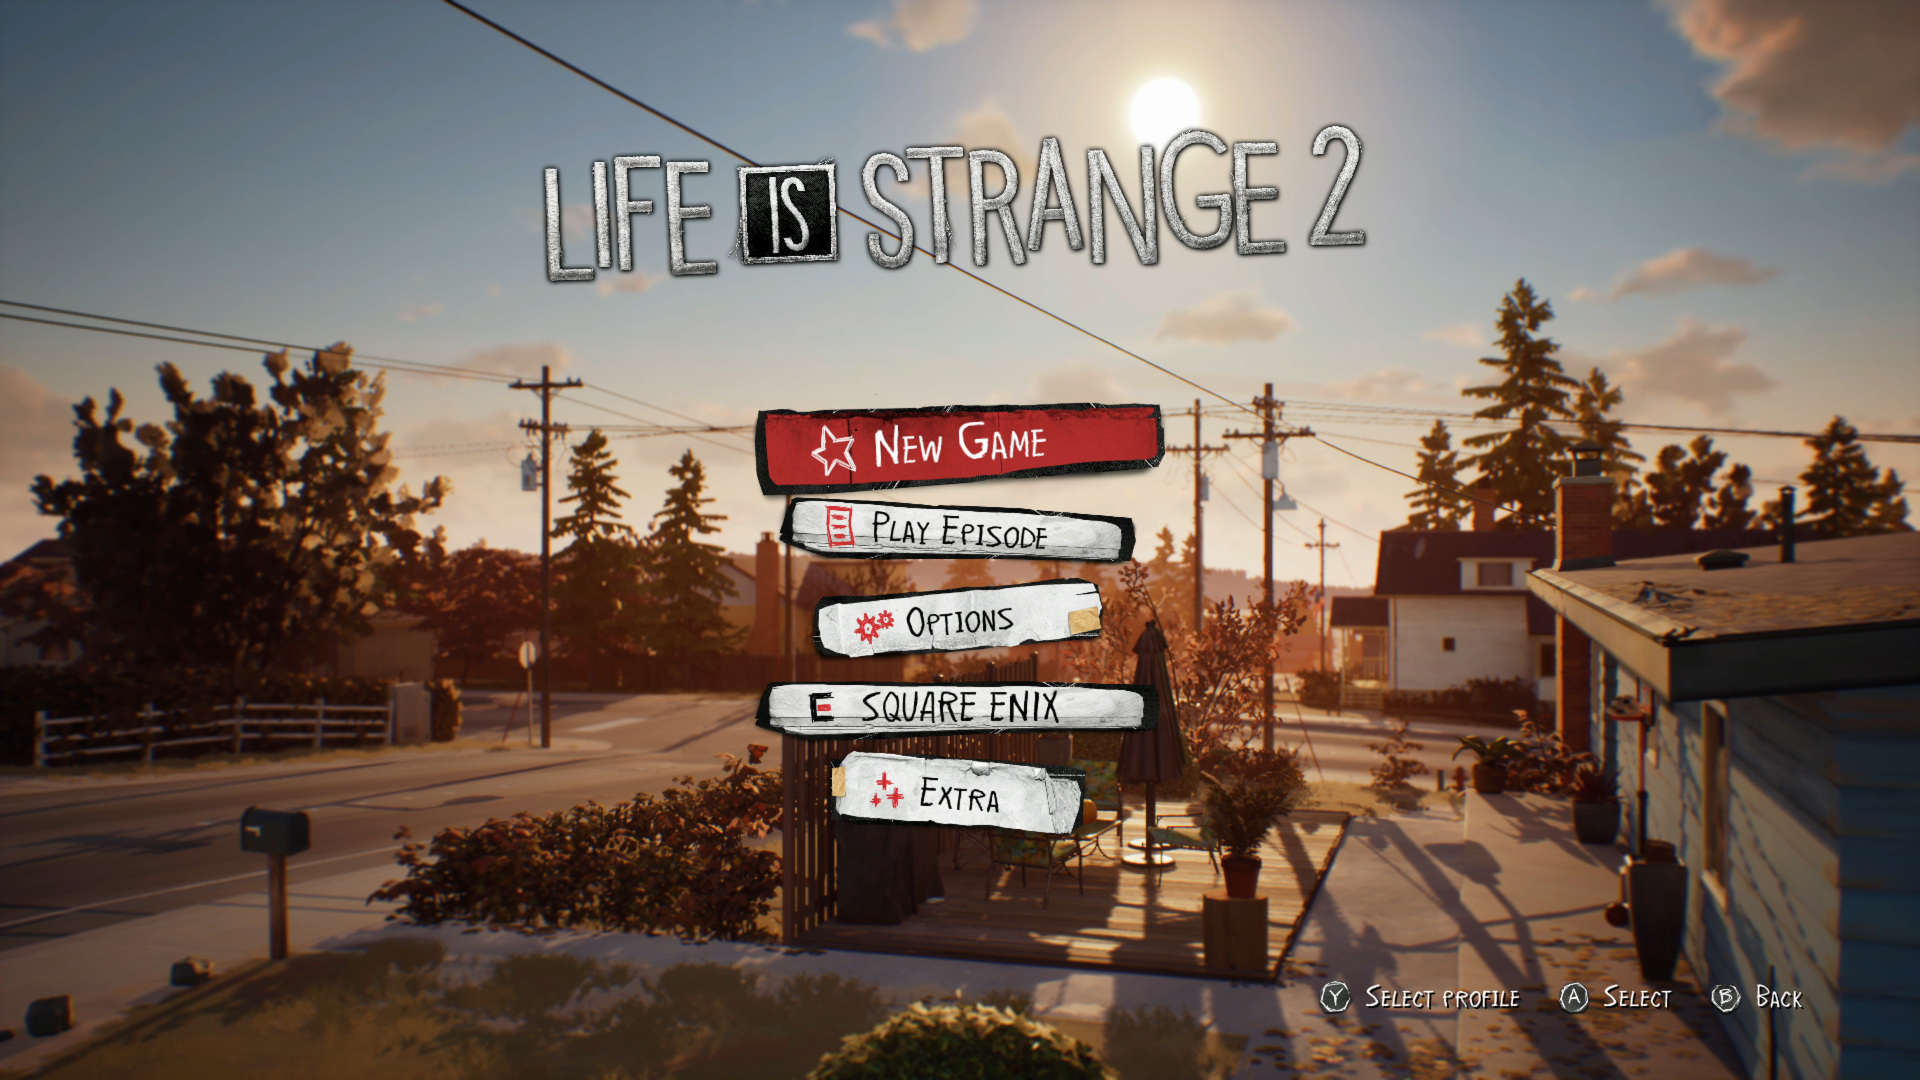 6 2 this is the life. Life is Strange меню. Игра Life is Strange 2. Life is Strange 2 menu. Life is Strange эпизод 2.